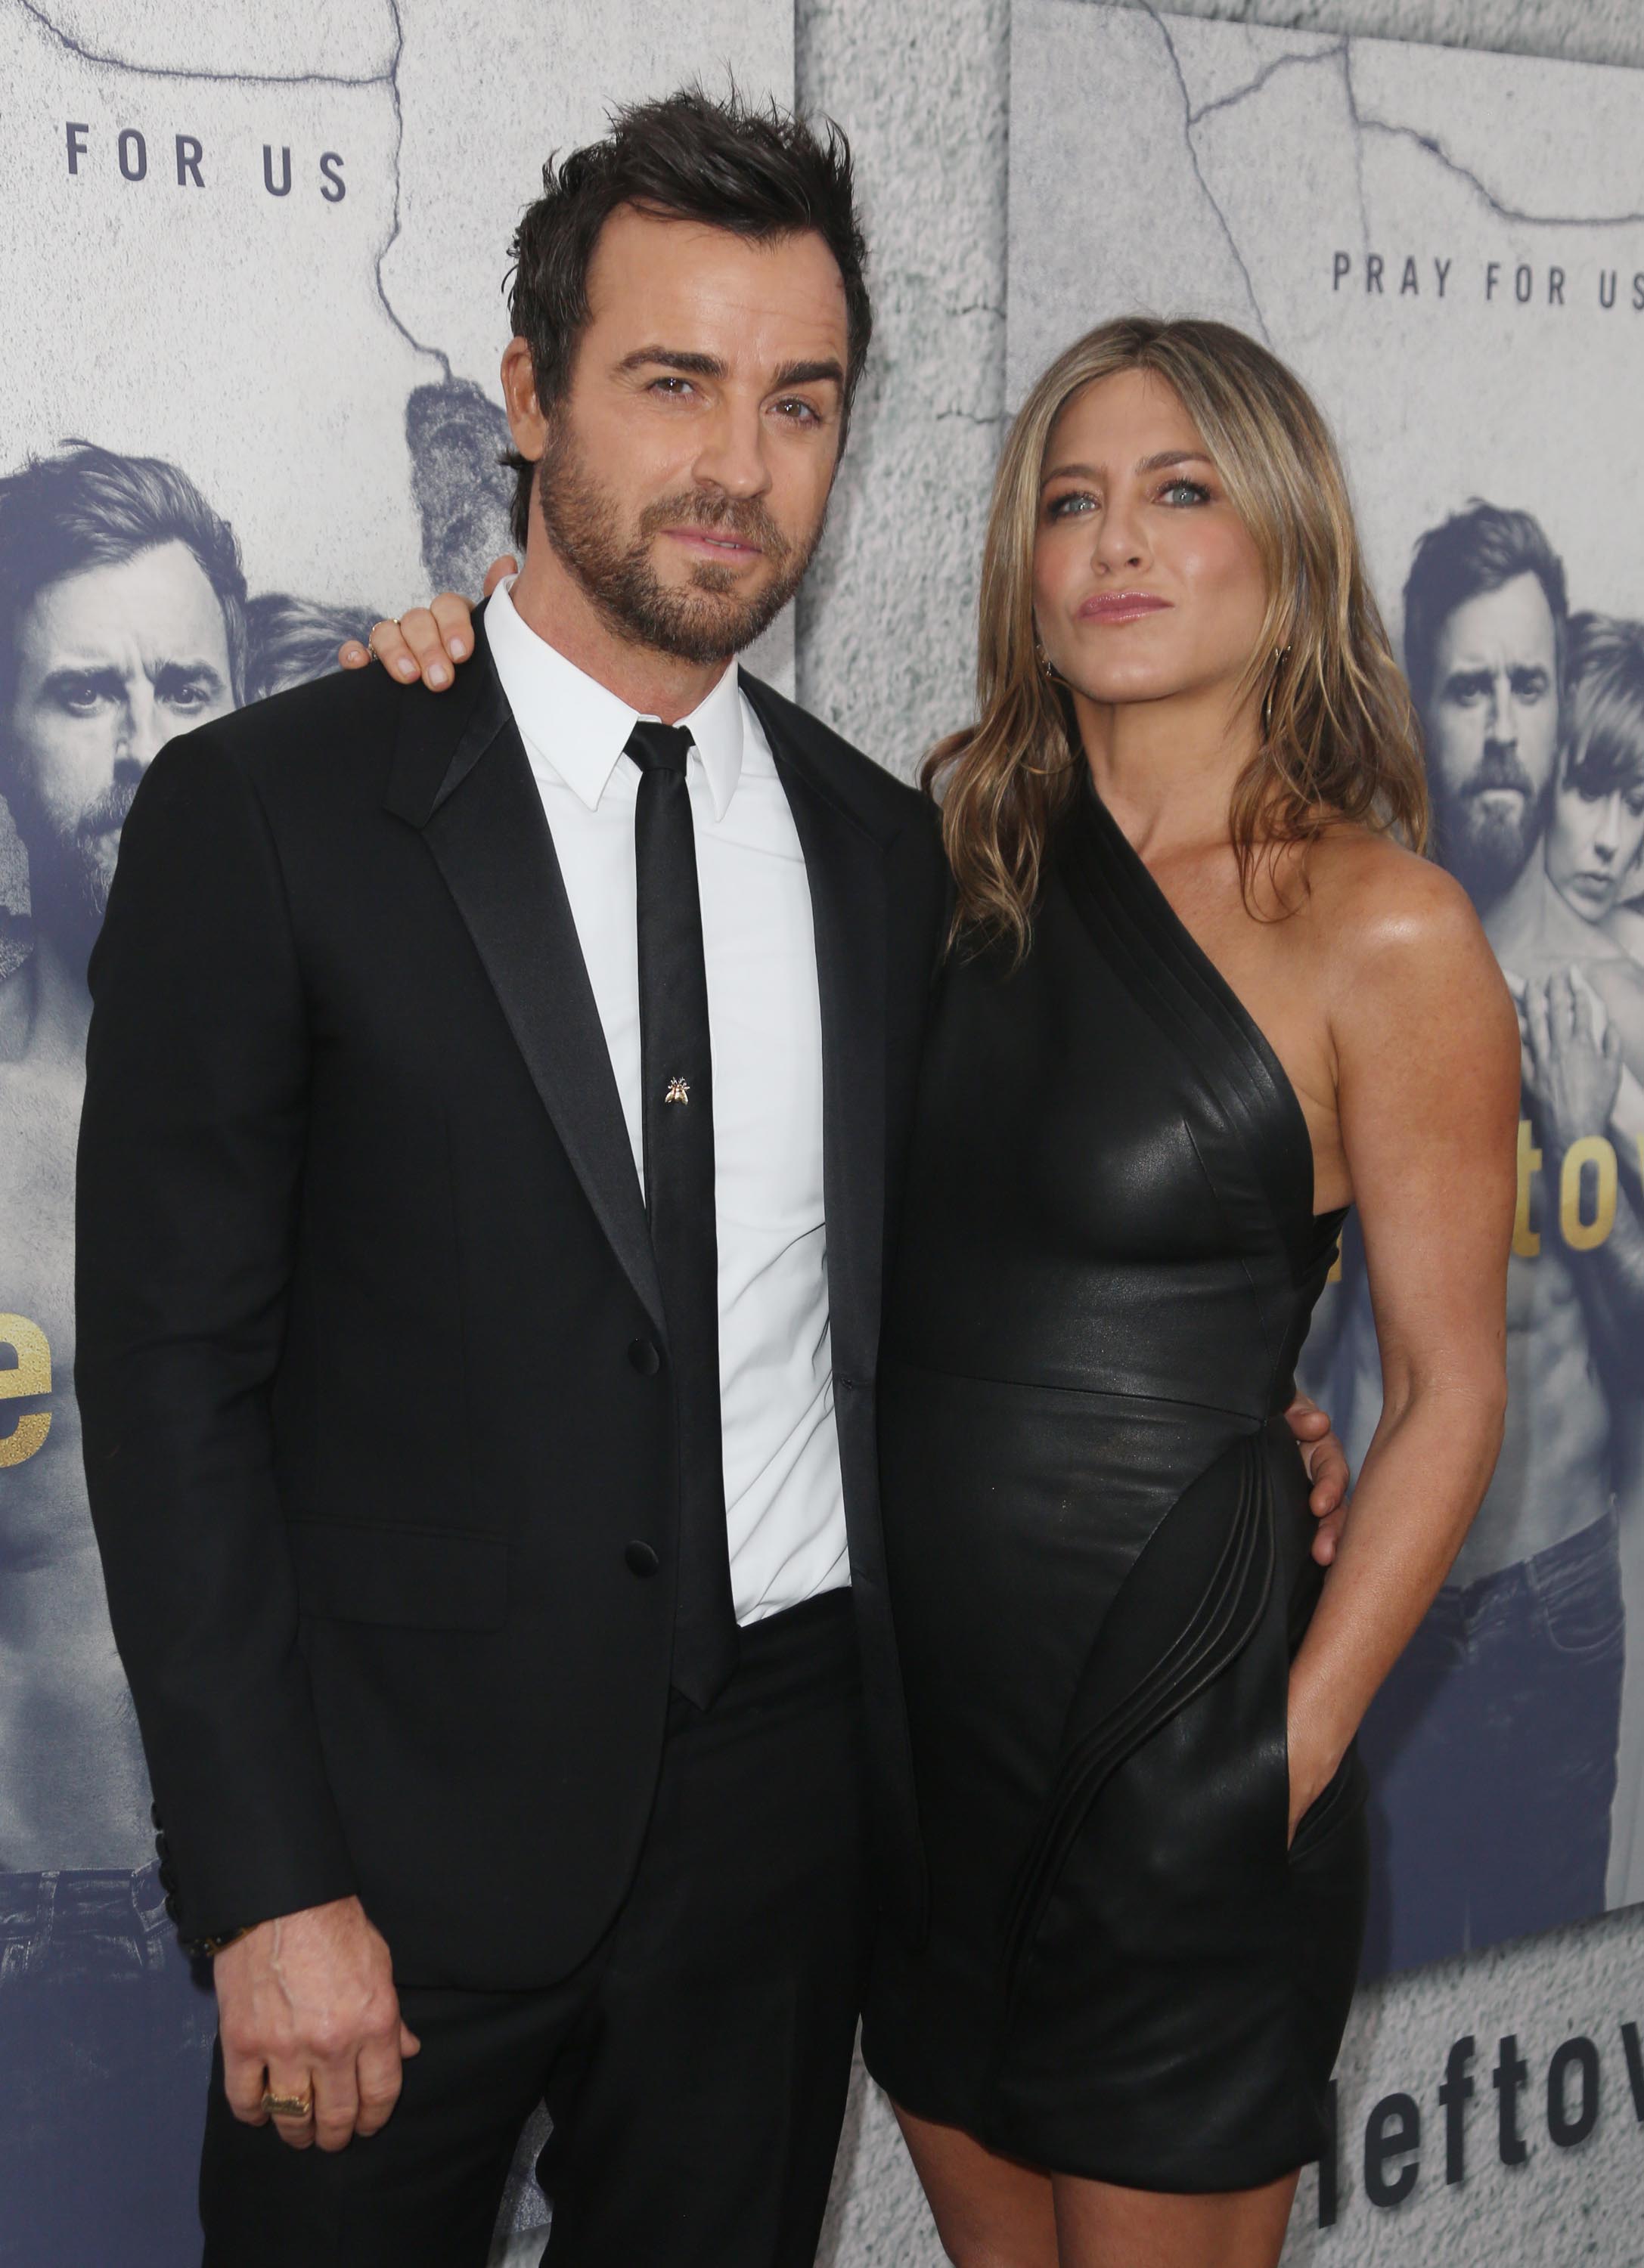 Jennifer Aniston attends The Leftovers Season 3 premiere